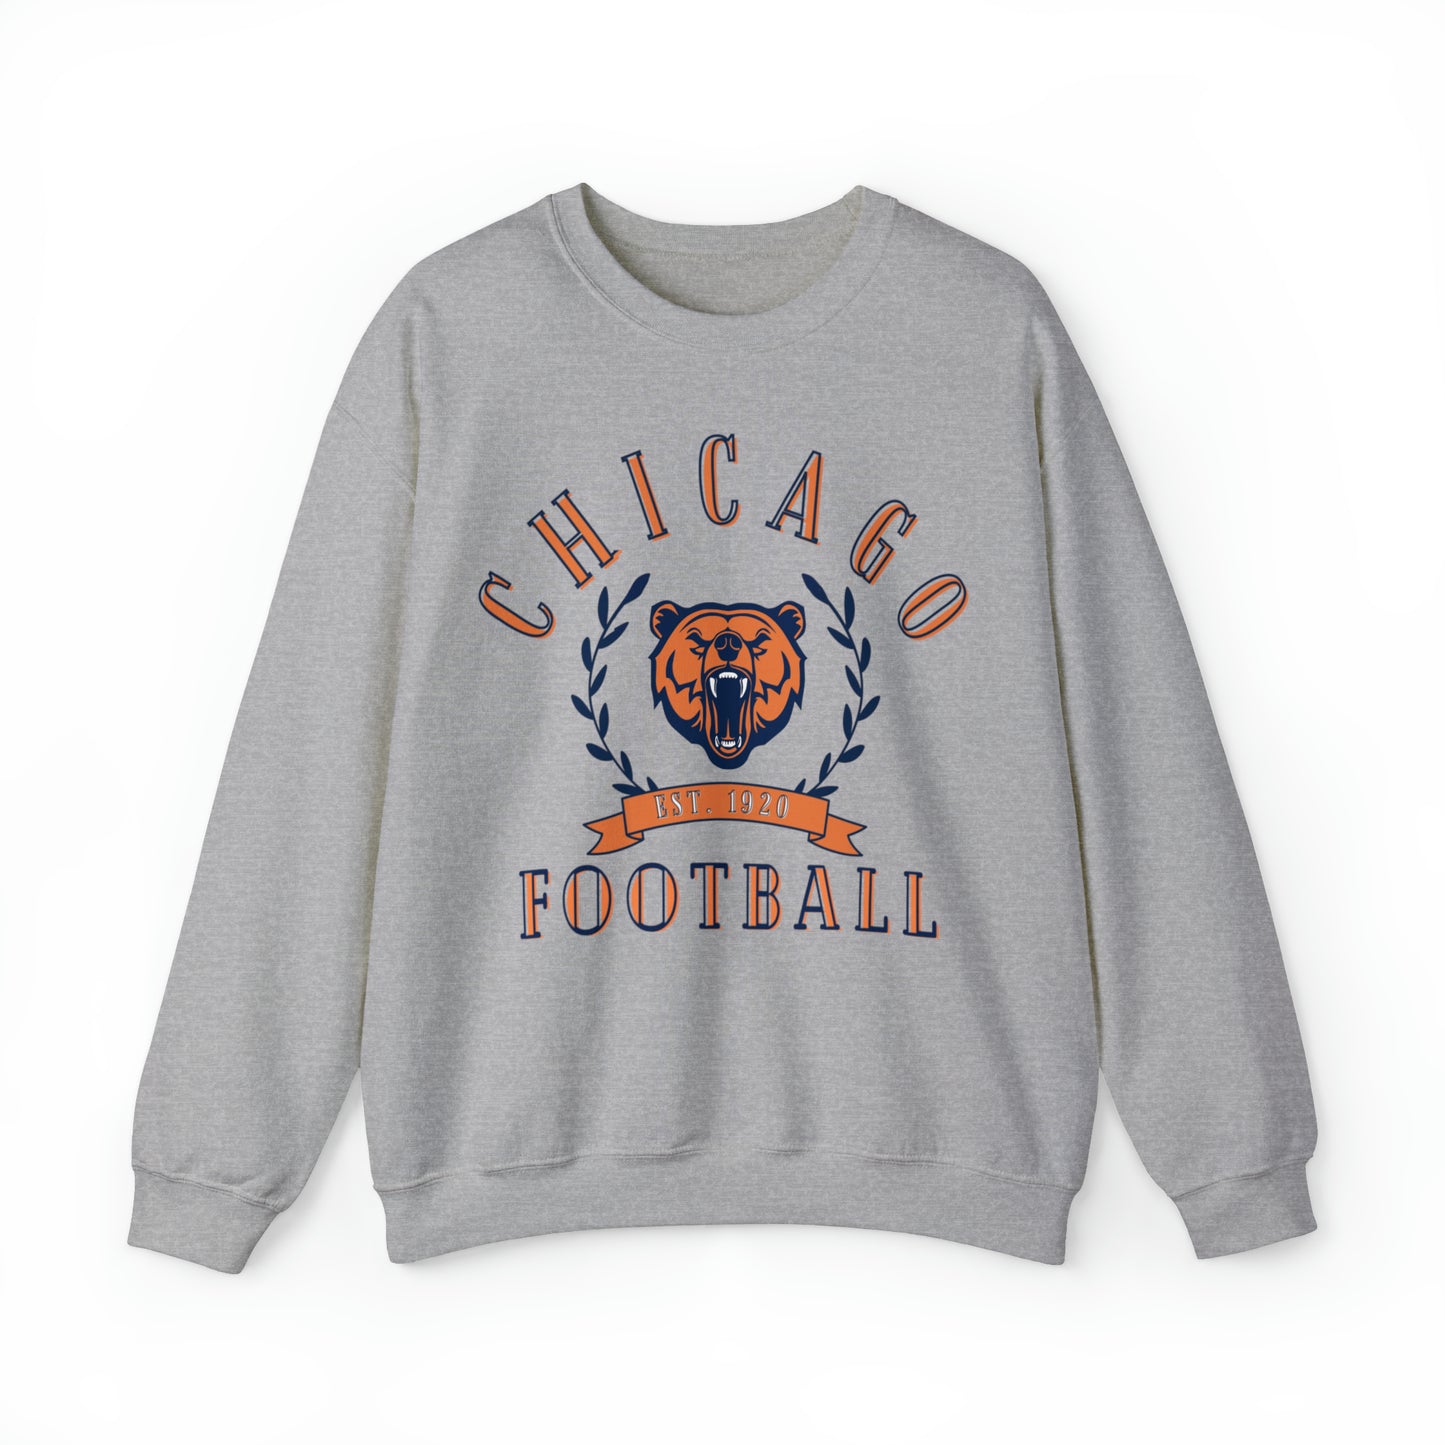 Chicago Bears Crewneck Sweatshirt - Vintage NFL Football Unisex Men's Women's Apparel - Design 3